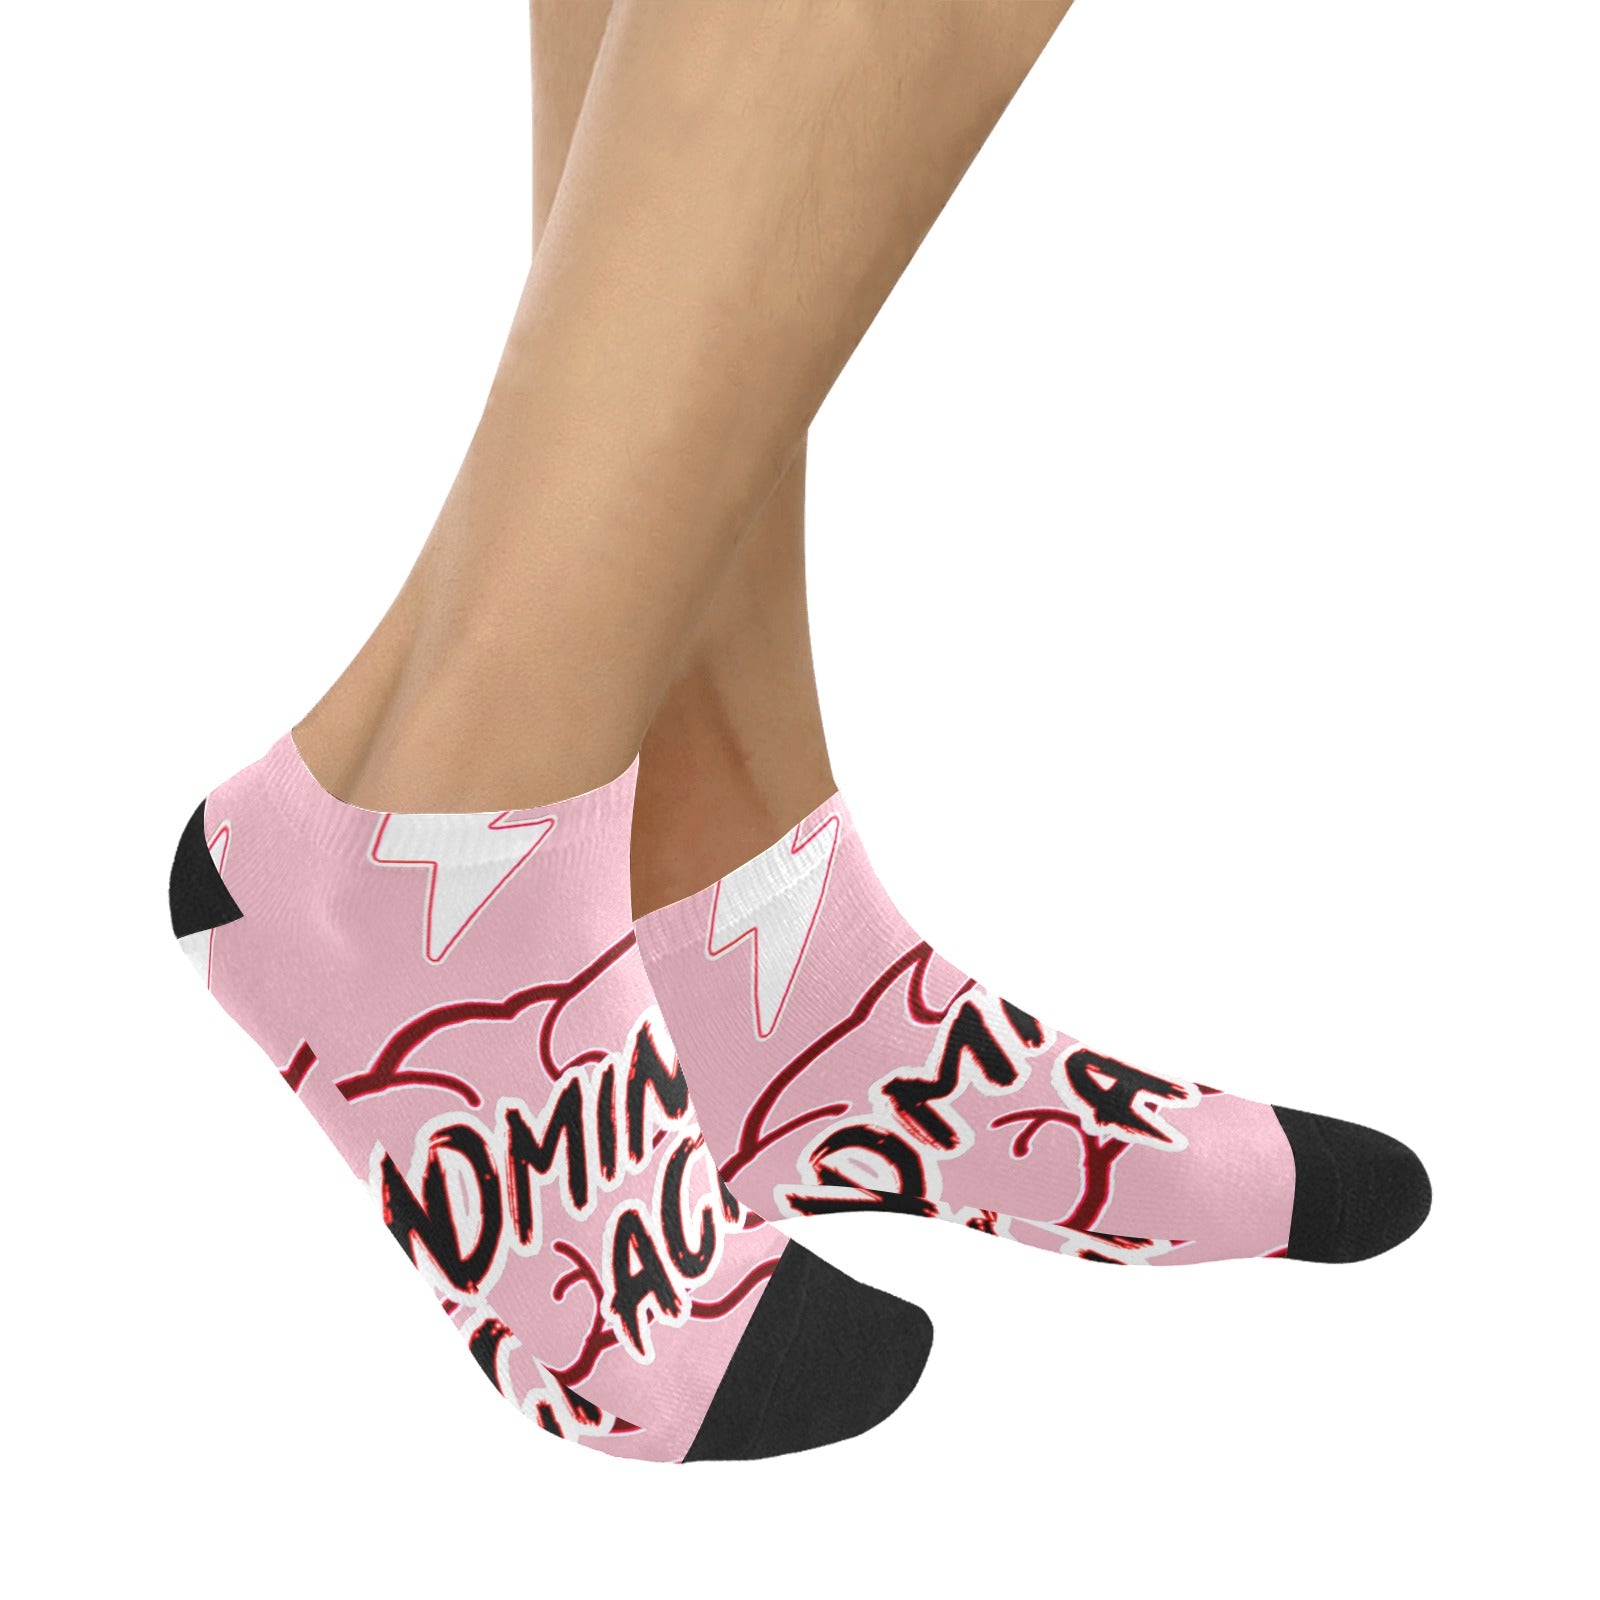 fz men's mind ankle socks one size / fz mind socks - pink men's ankle socks